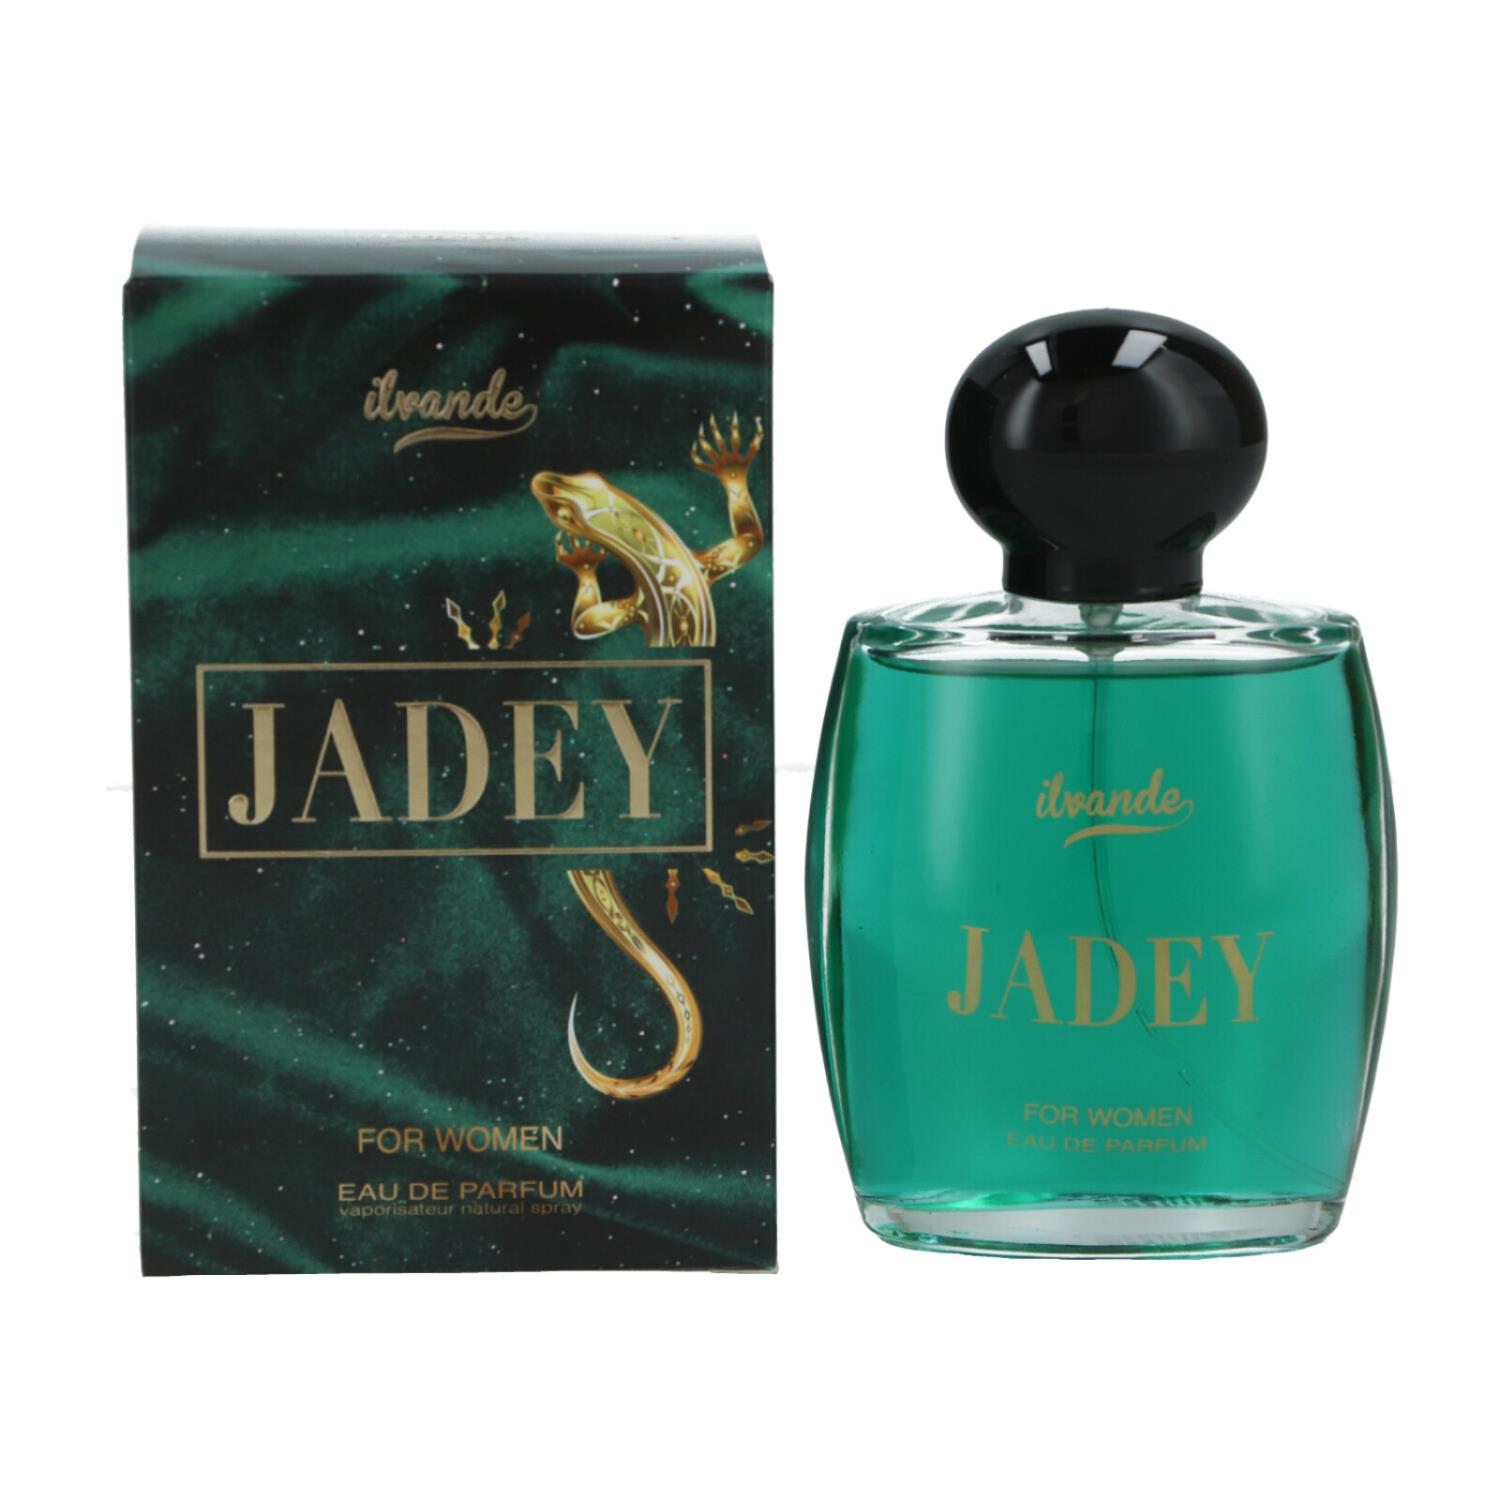 Ilvande Jadey For Women Eau De Parfum 100ml